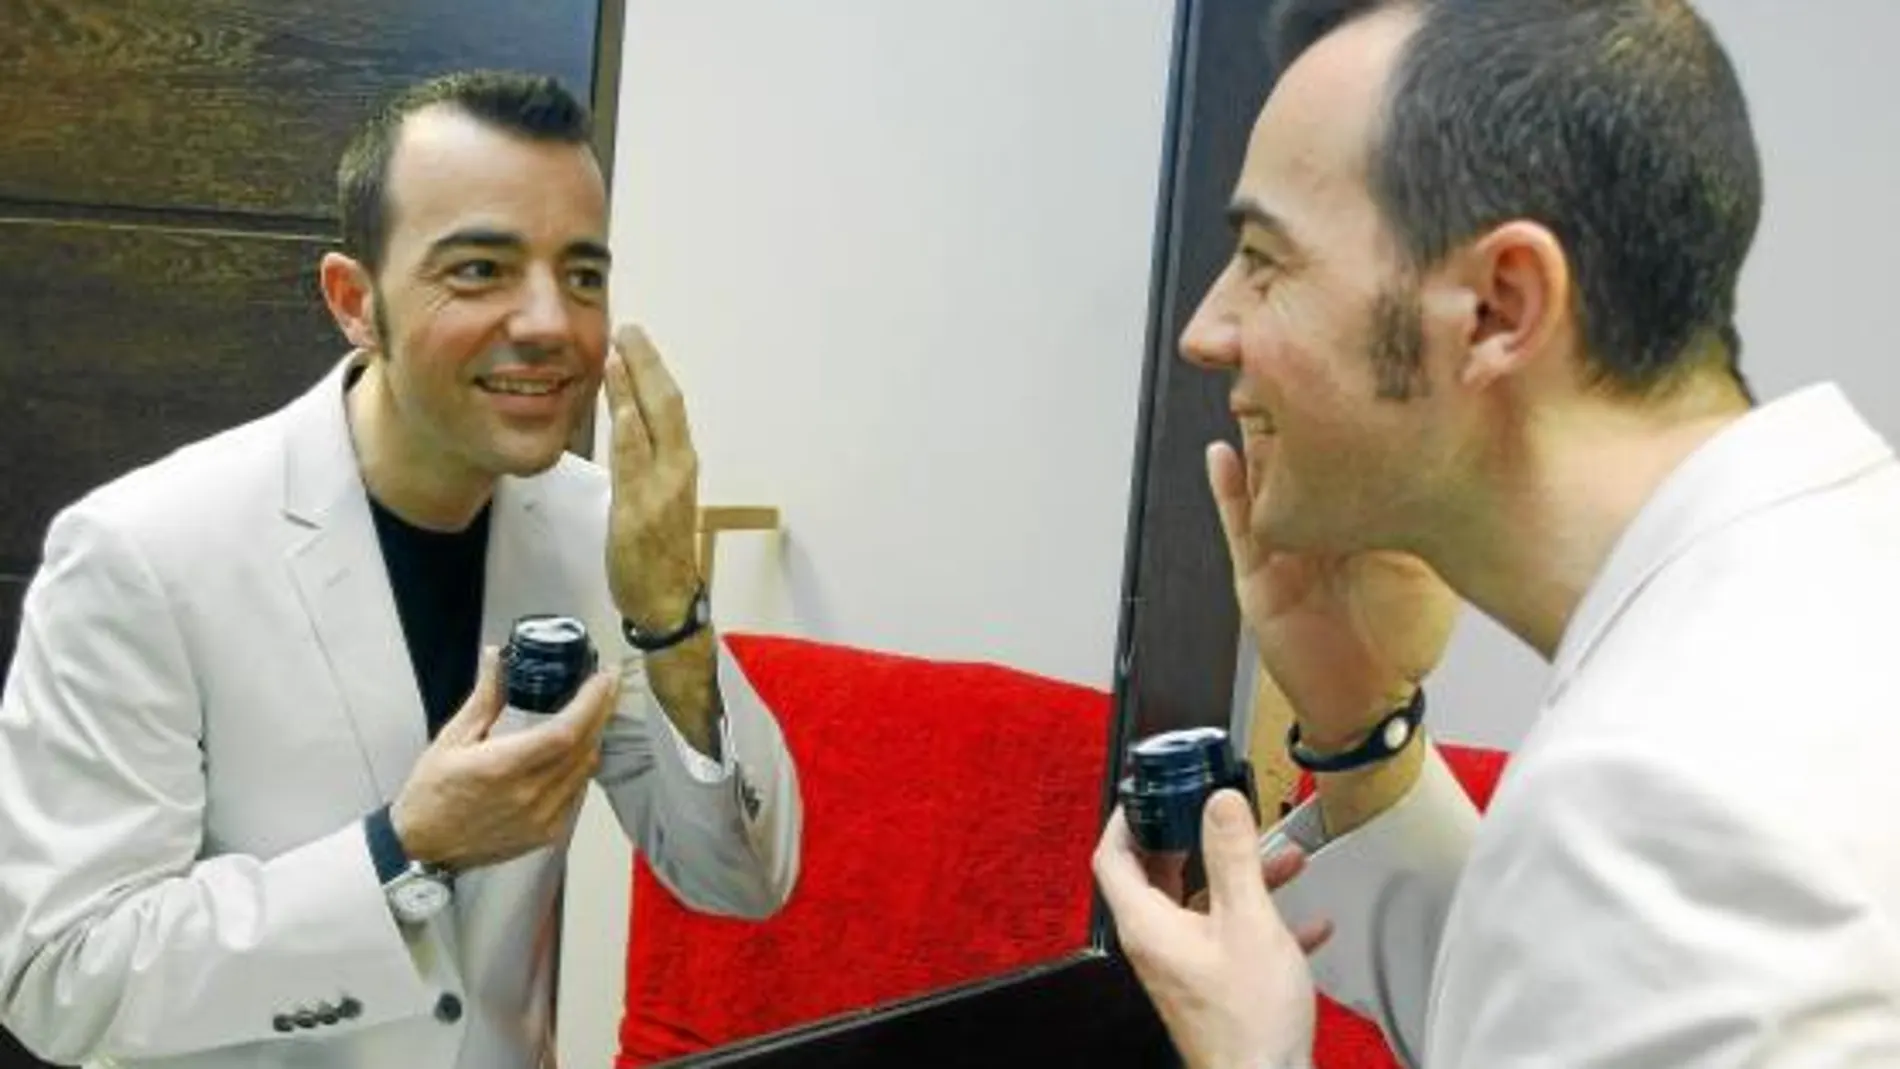 Frans Reina: «Los españoles ya usan cosméticos sin vergüenza»